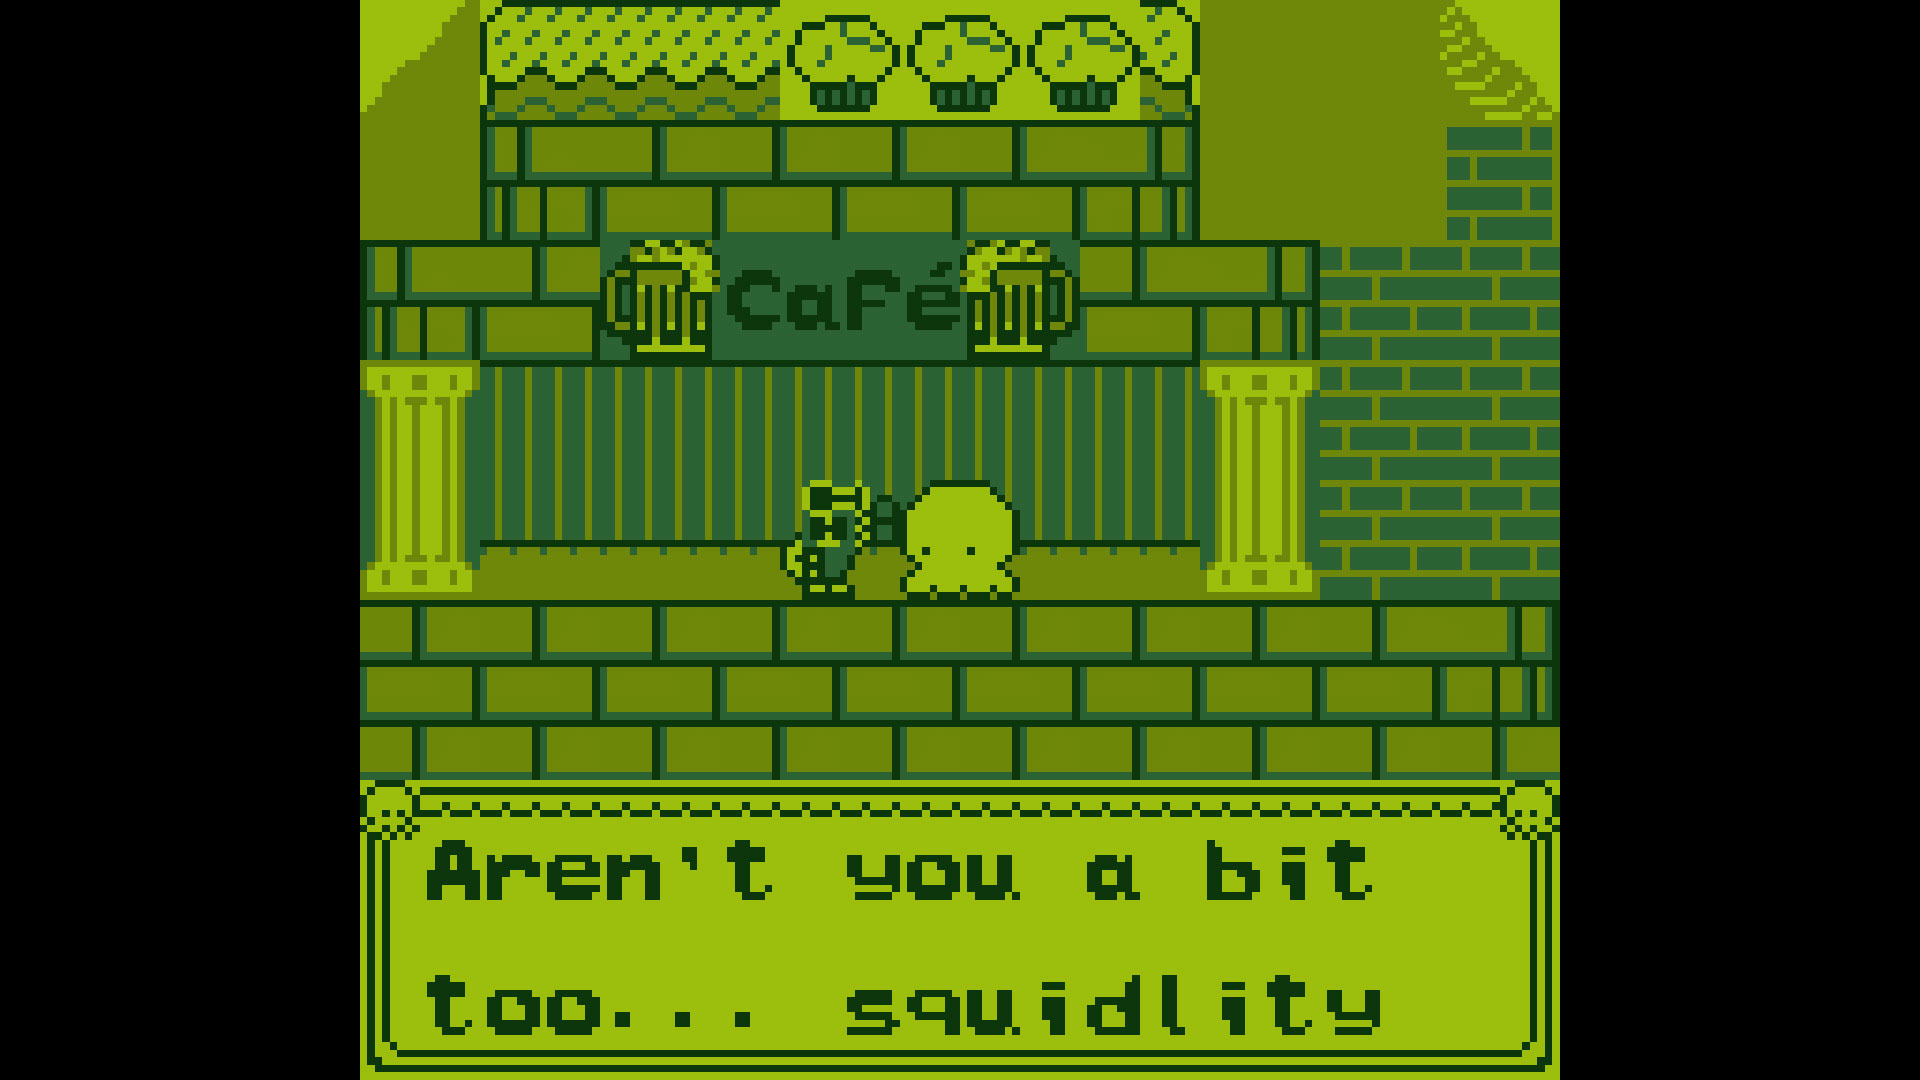 Squidlit screenshot